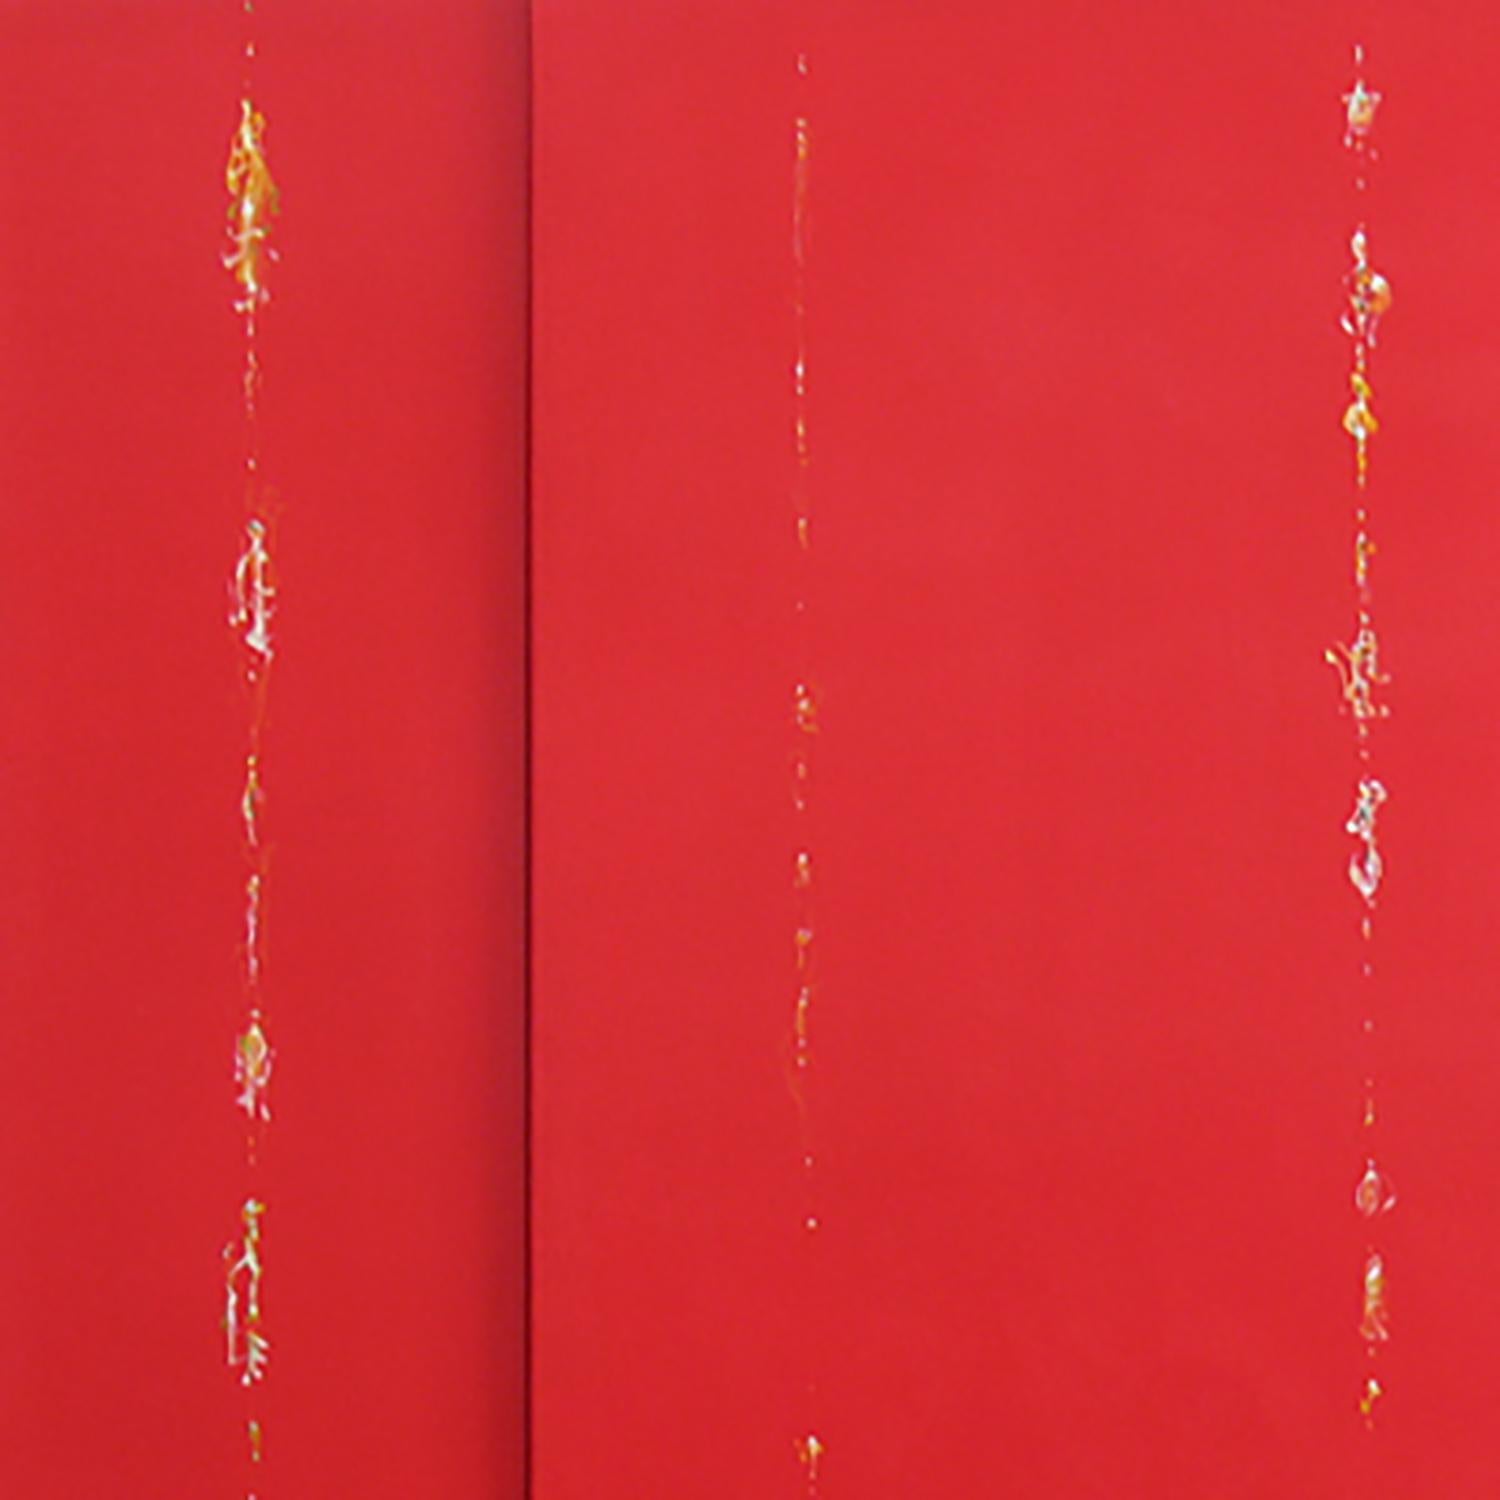 #5205 – Painting von Hiro Yokose